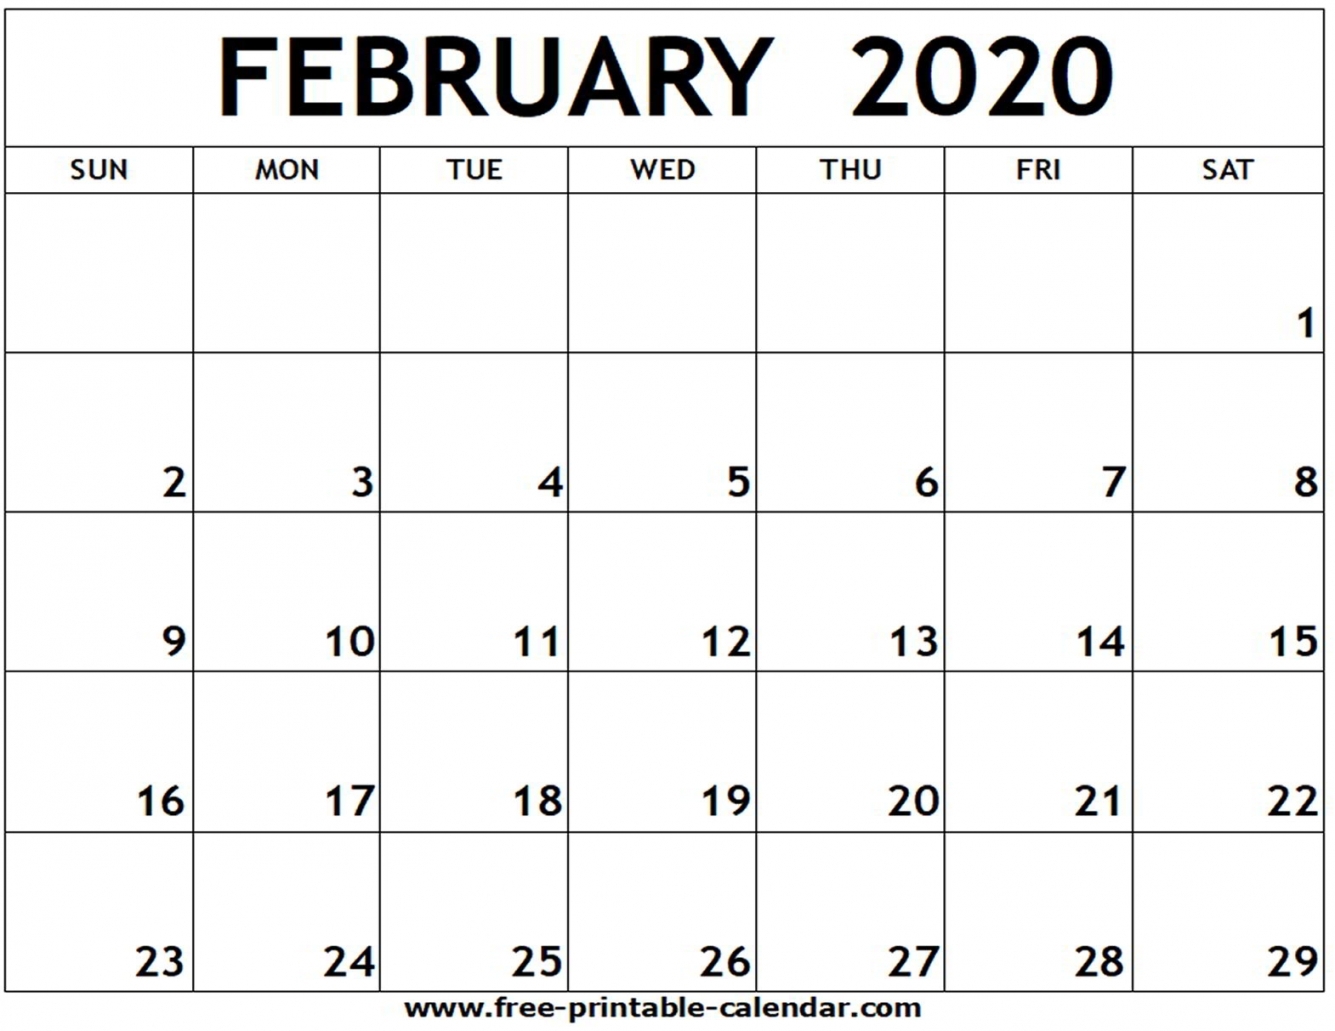 February 2020 Printable Calendar